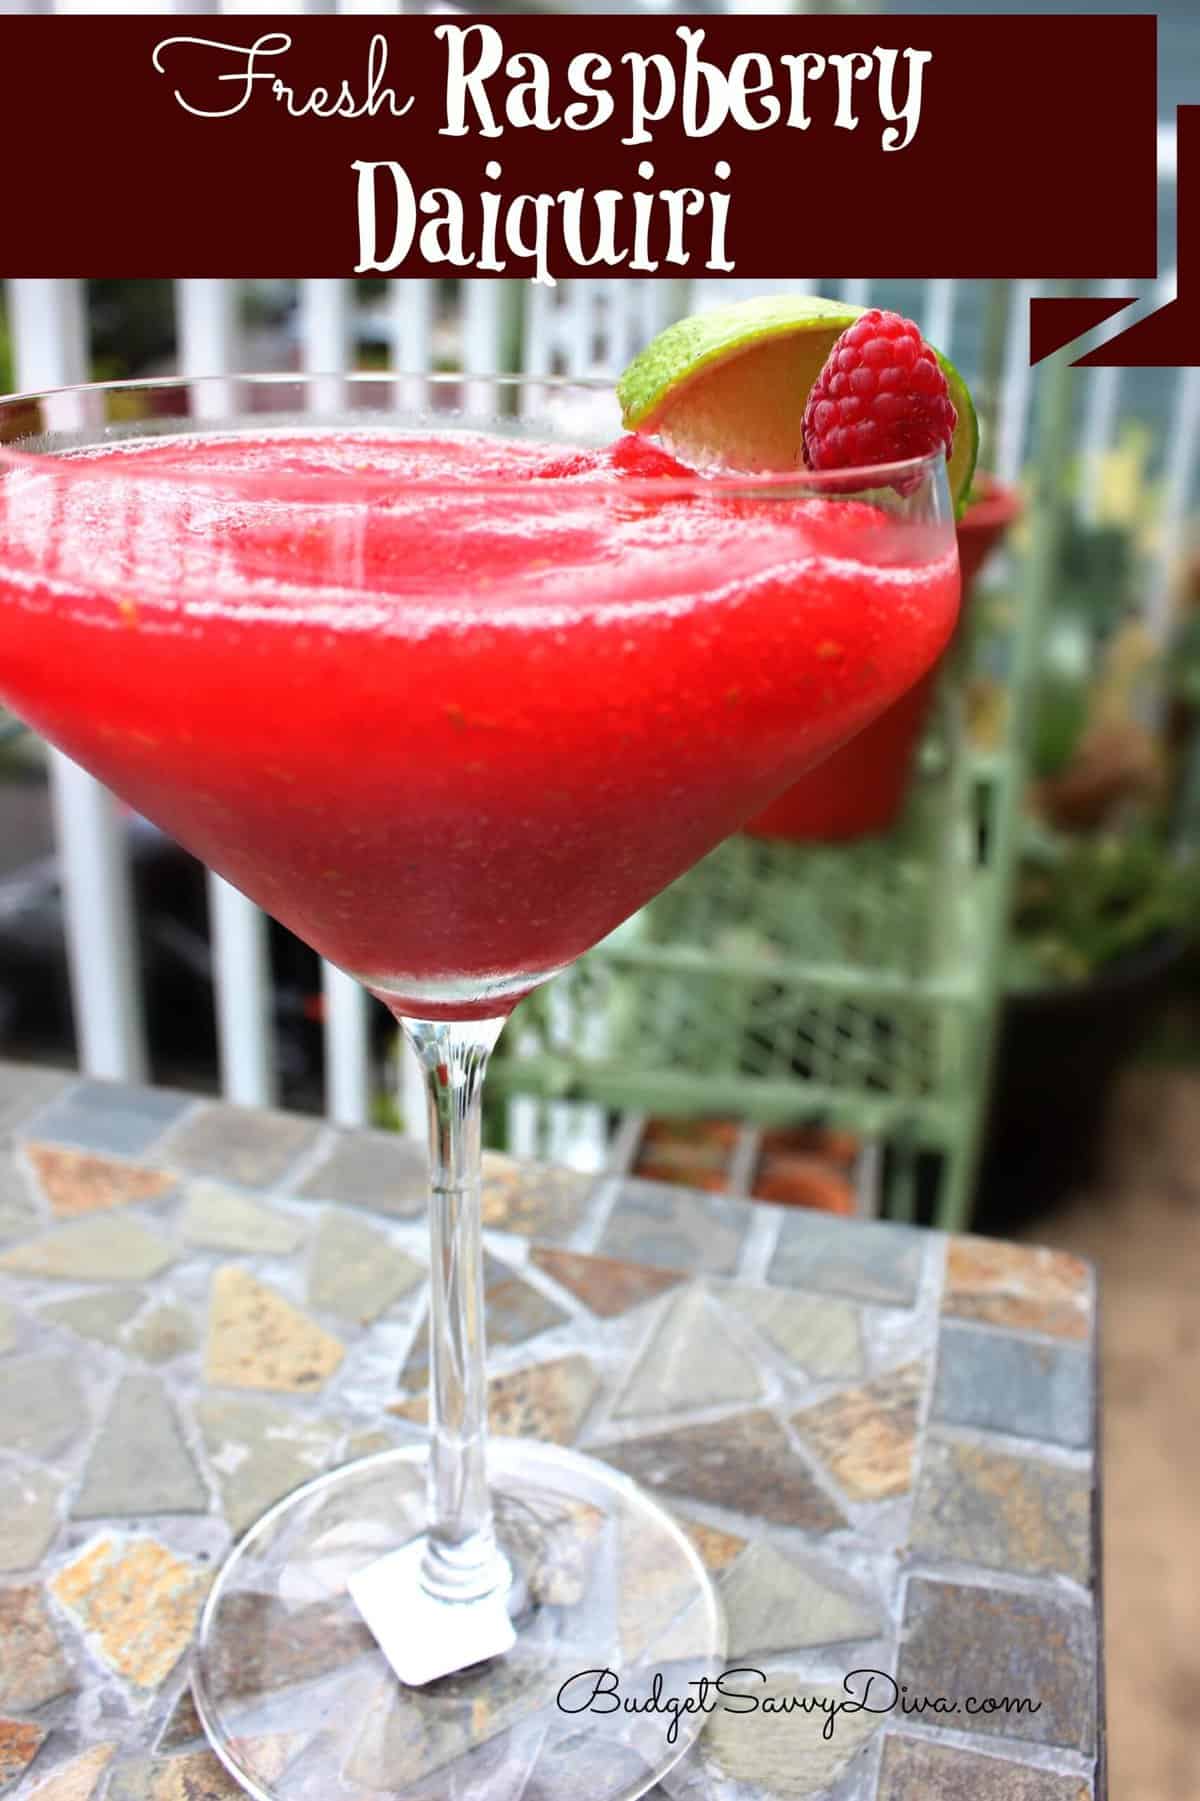  Add a splash of club soda for a fizzy twist on this classic cocktail.